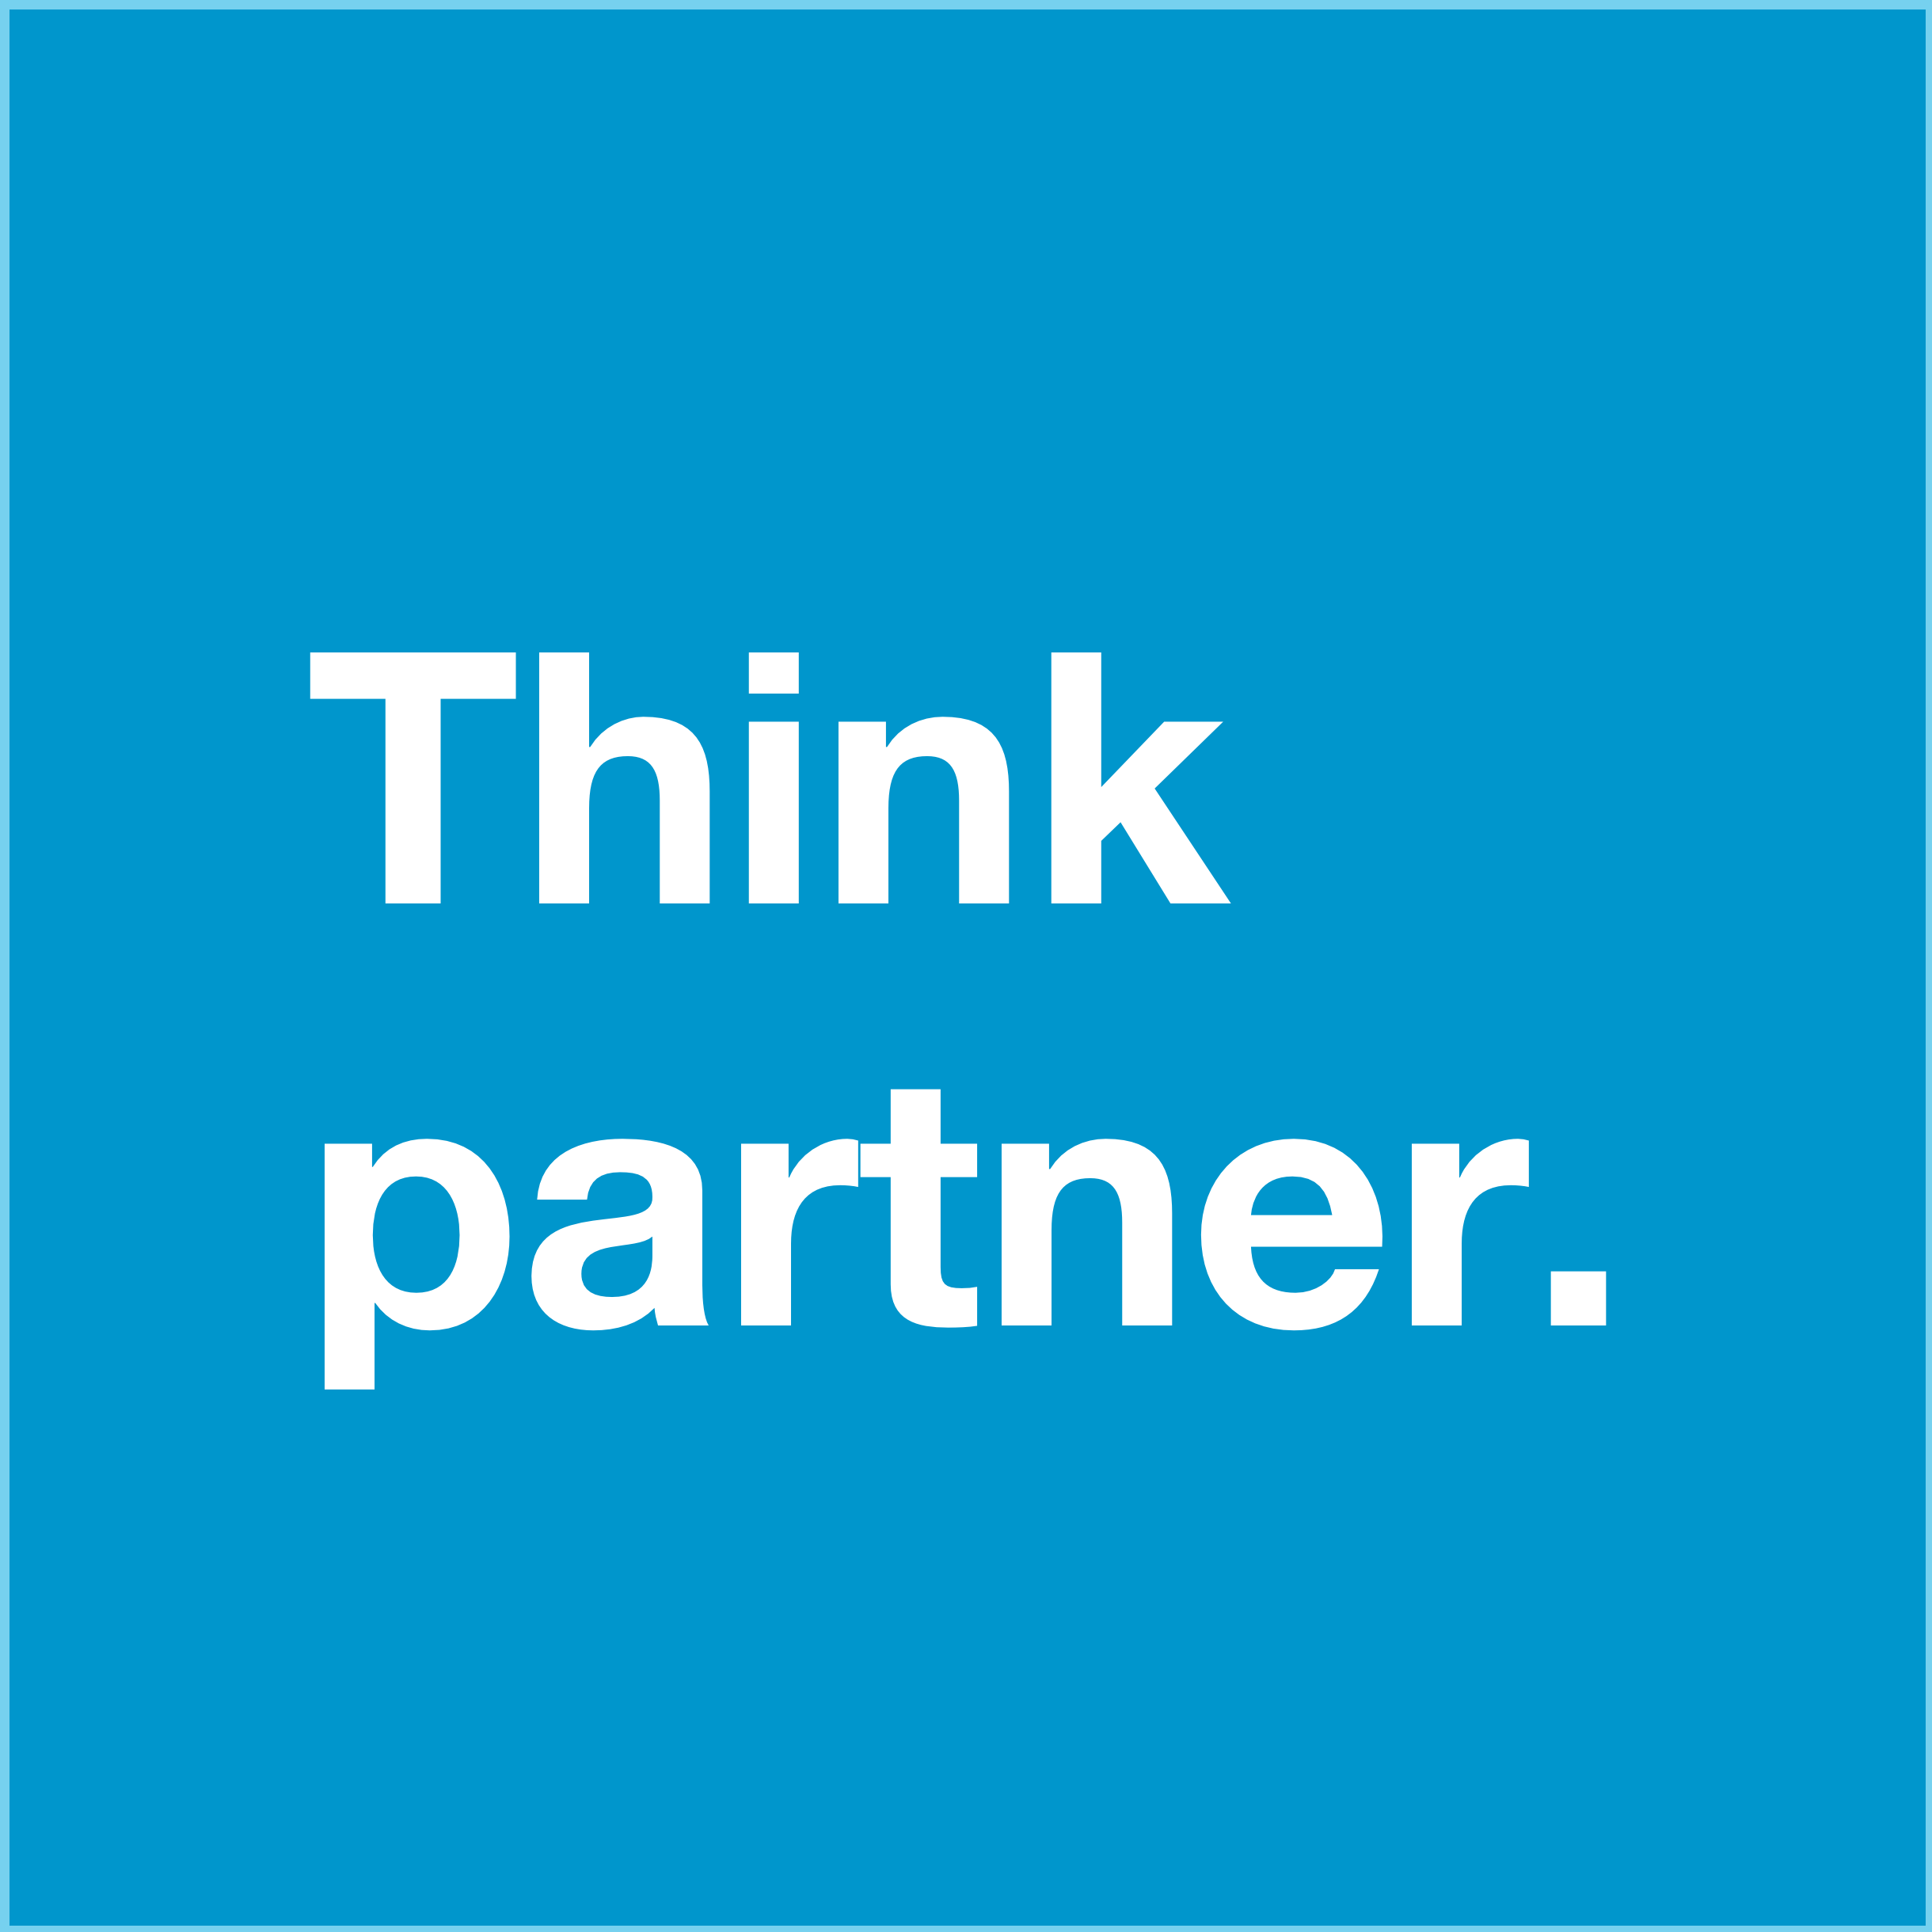 Think partner